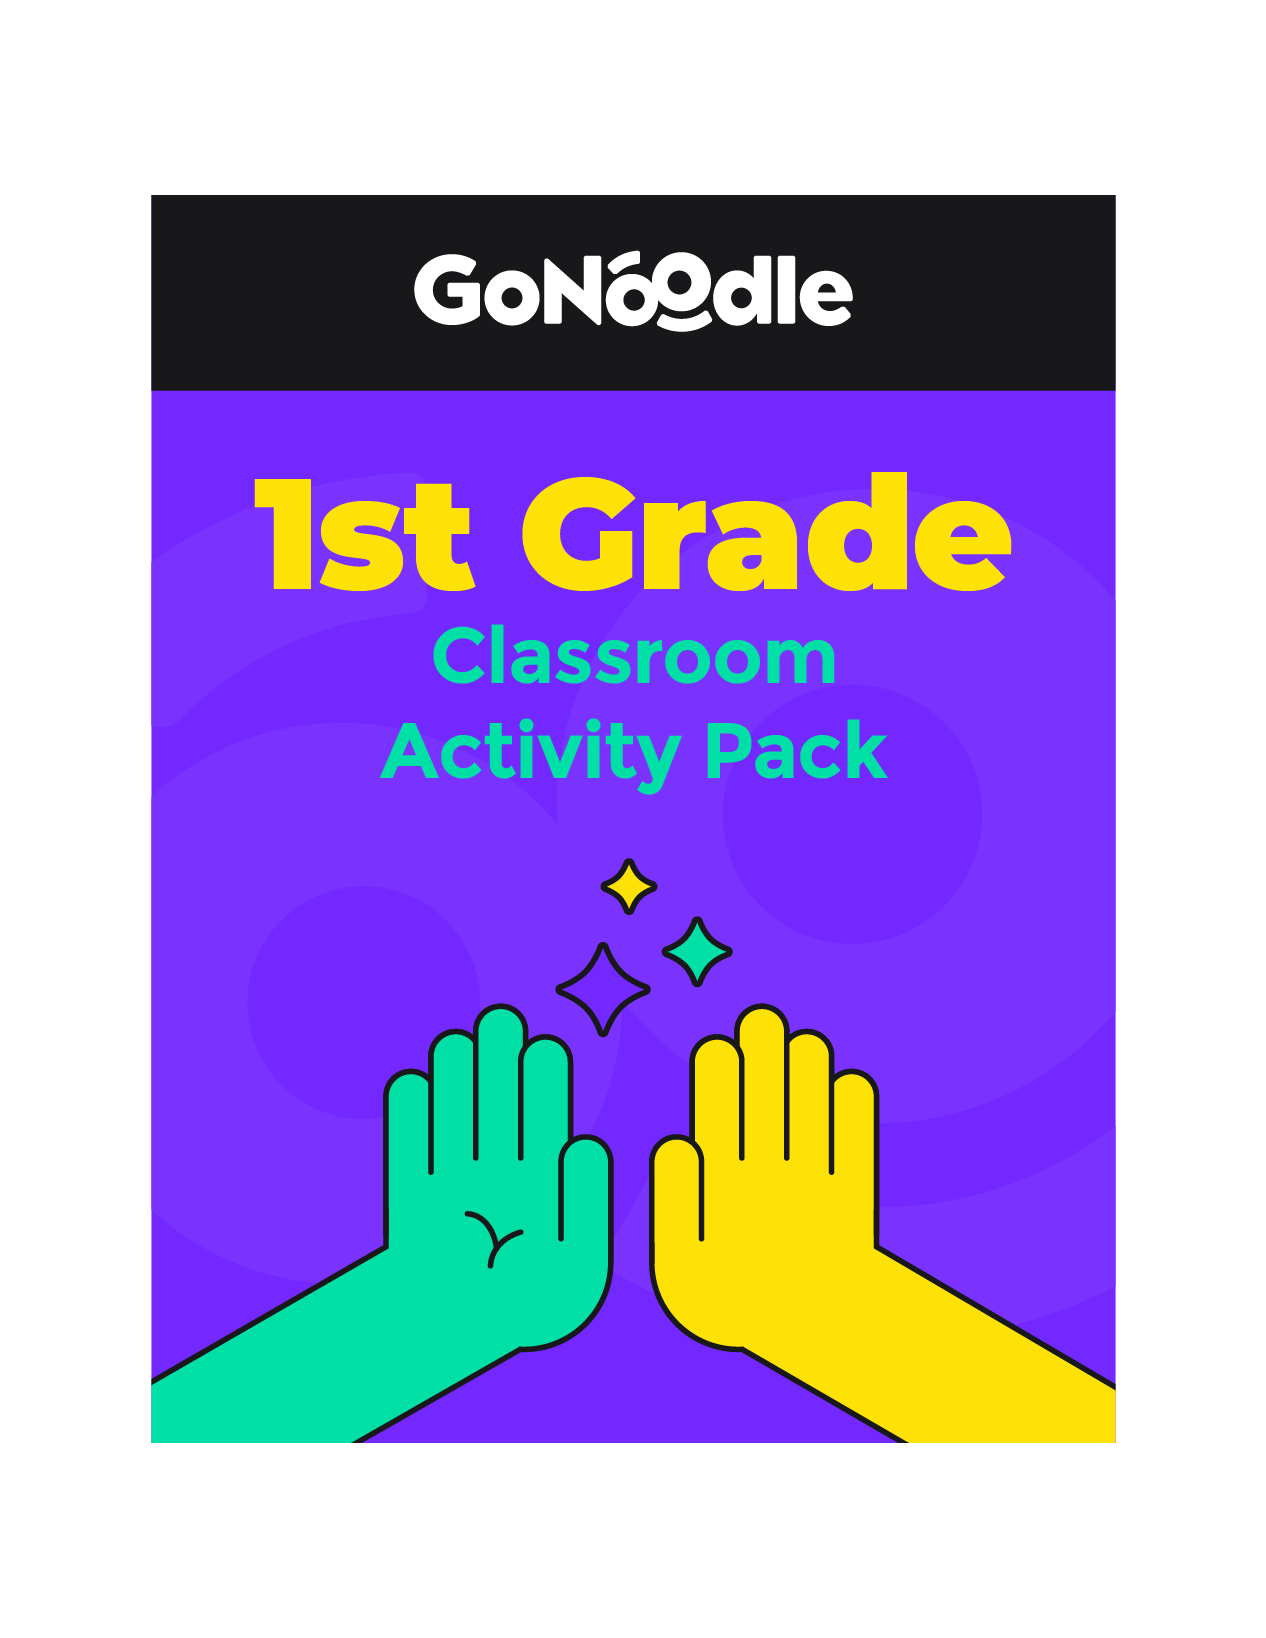 gonoodle-1st-grade-activity-pack